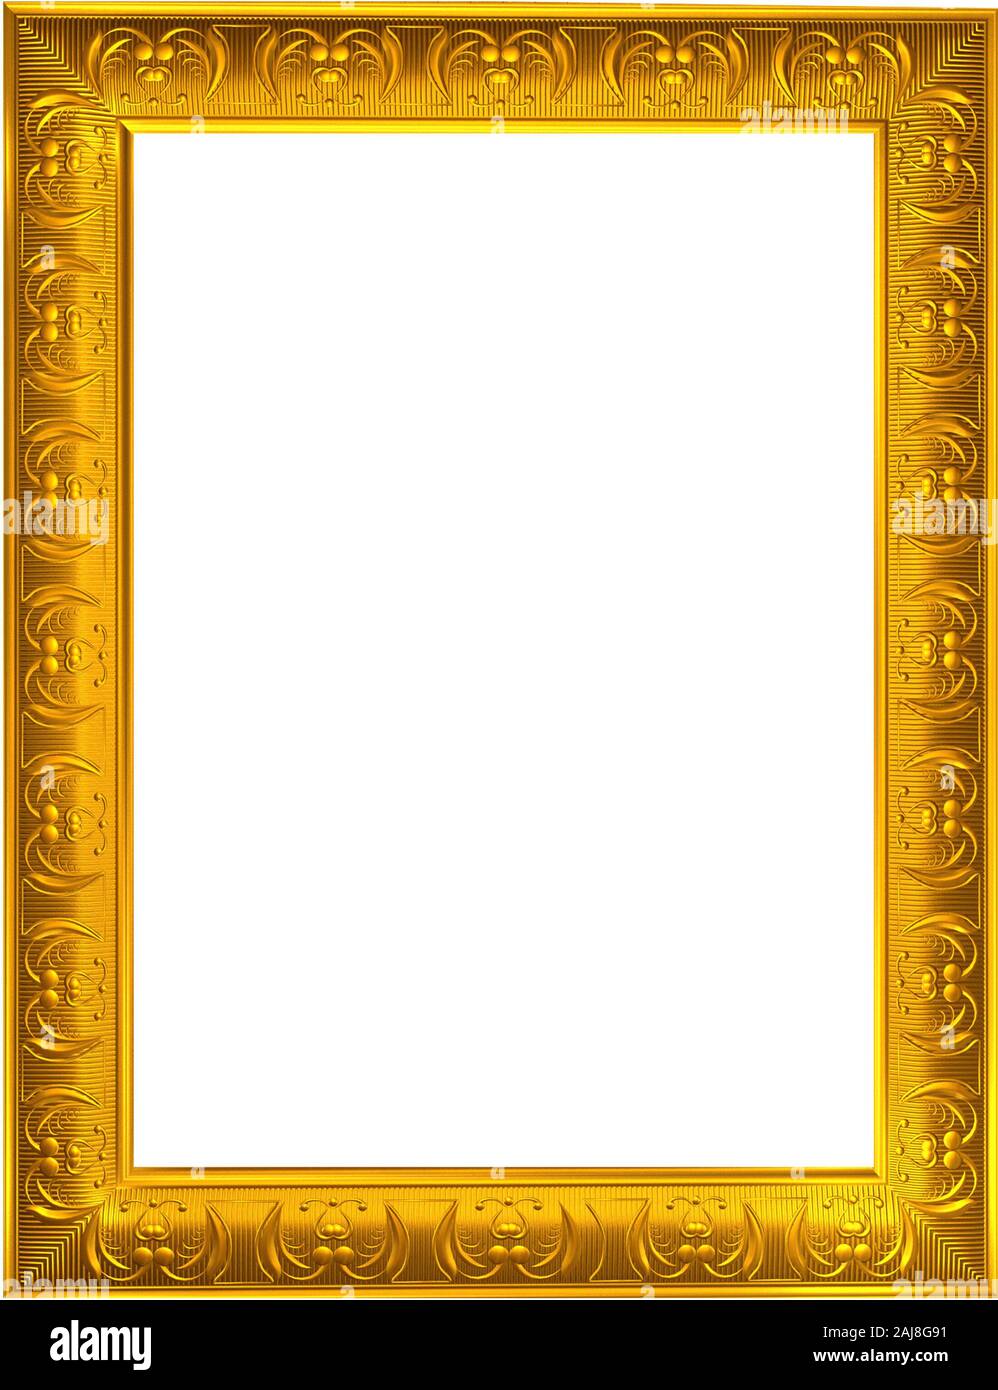 fancy gold border designs